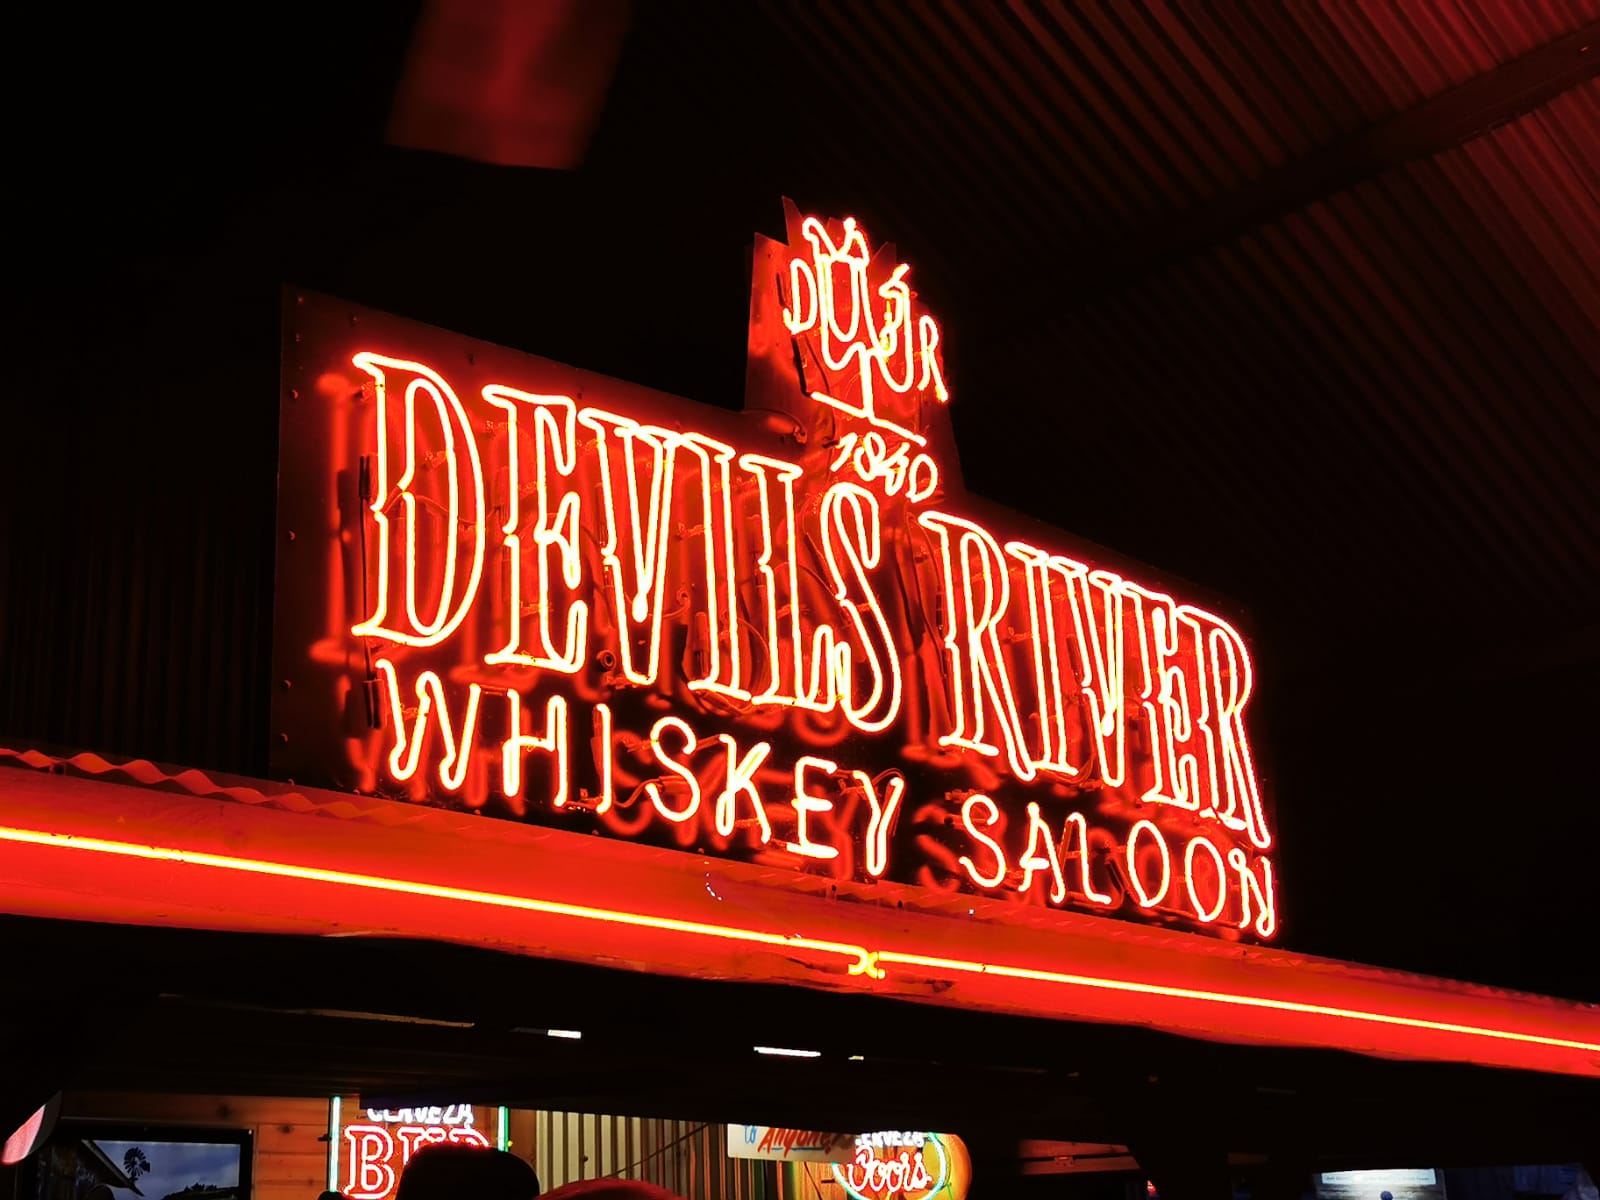 Devils-River-Whiskey-Saloon-San Antonio-Texas-USA-TRUE-amerika-america-amerika-rundreisen-usa-kanada-reiseveranstalter-individuelle-usa-reisen-abenteuer-stars-hollywood-movie-blockbuster-golden-gate-brigde-freiheitsstatue